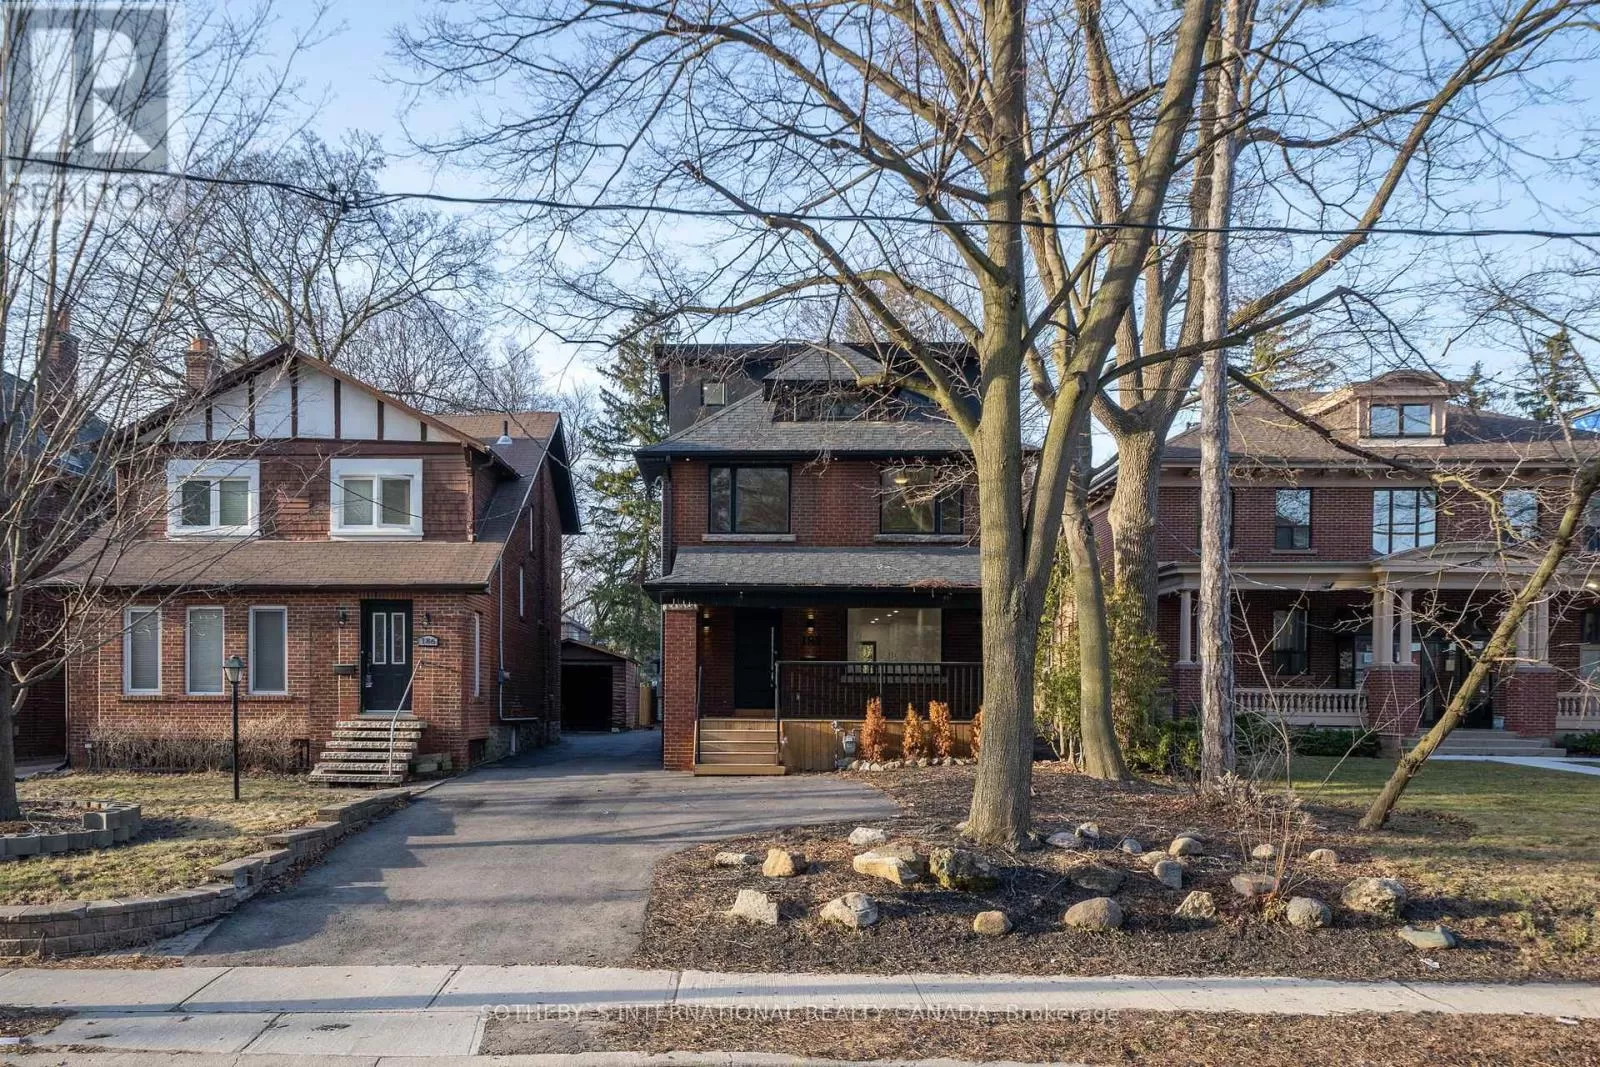 House for rent: 188 Keewatin Avenue, Toronto, Ontario M4P 1Z8